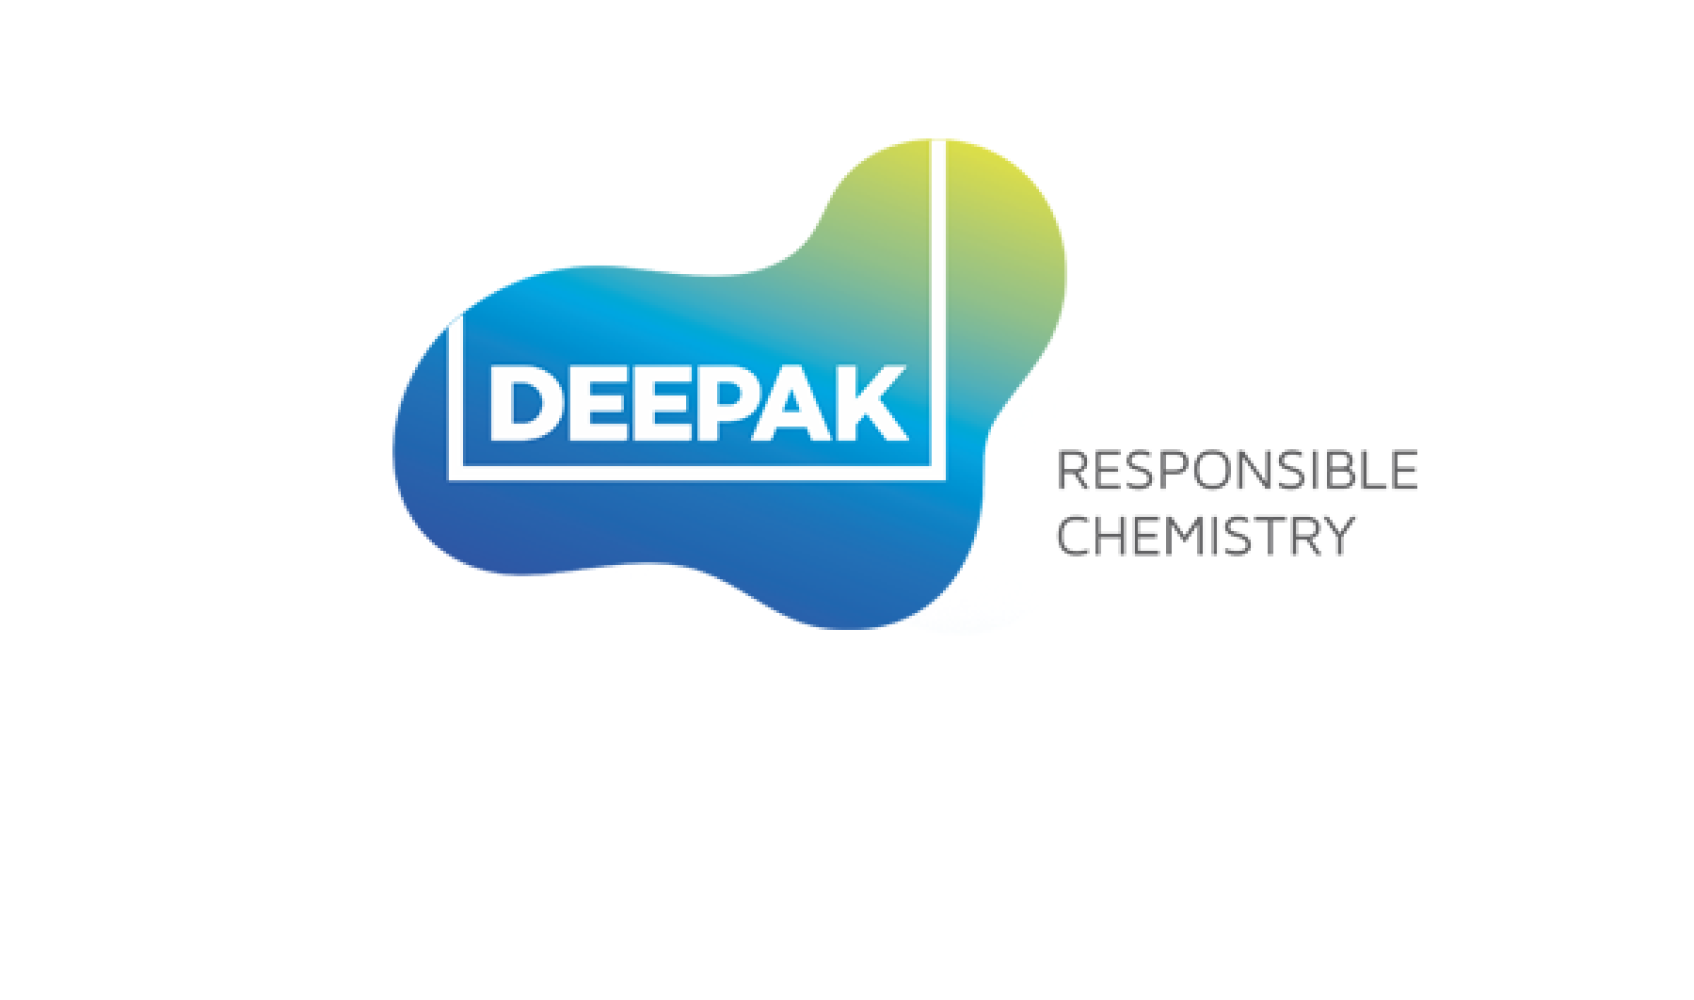 Deepak Group is Ram-Nath's chemical partner